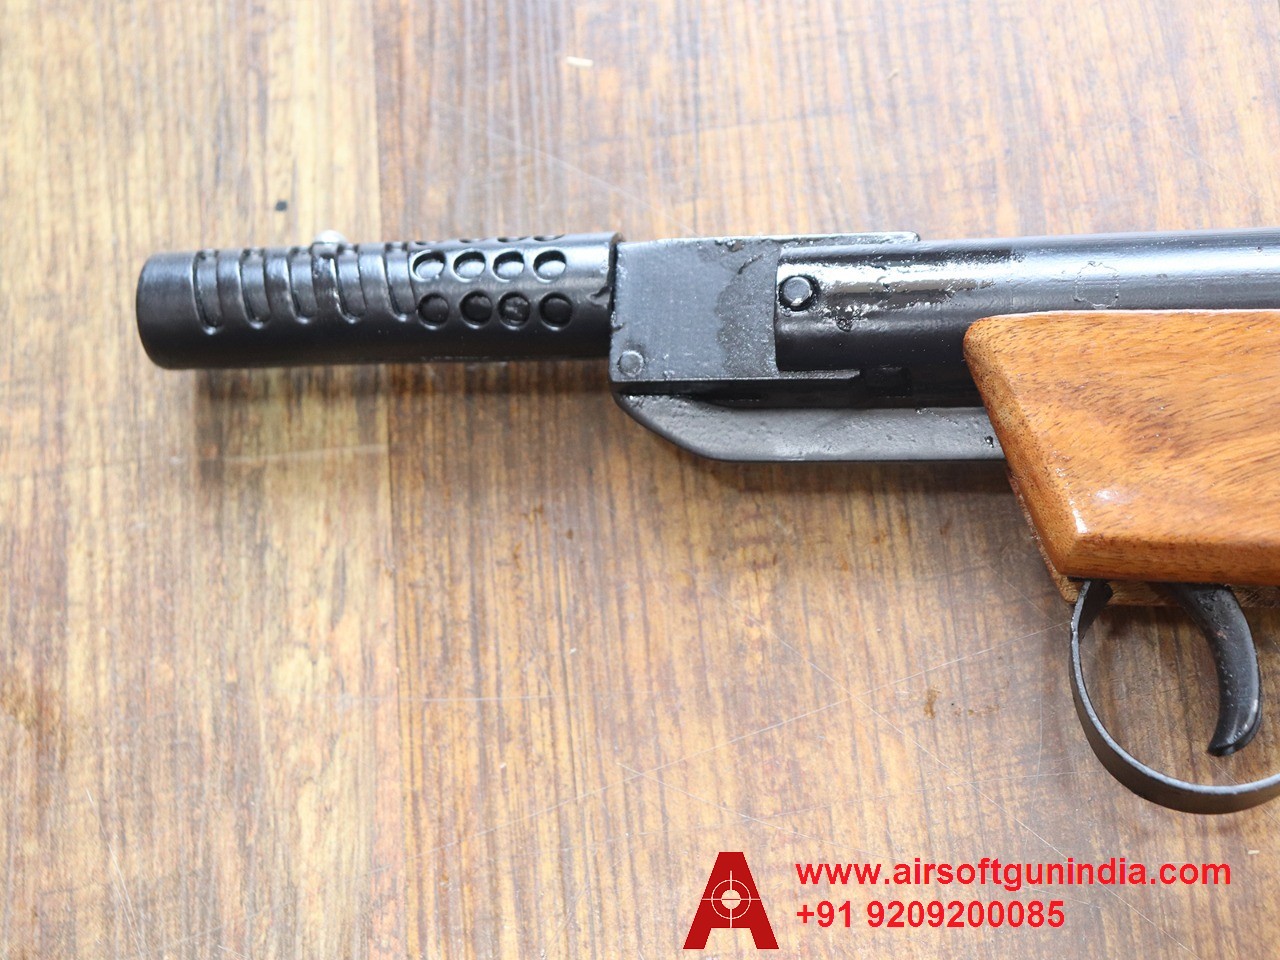 Bond Target Wood Single-Shot .177 Caliber / 4.5 Mm Indian Air Pistol By Airsoft Gun India